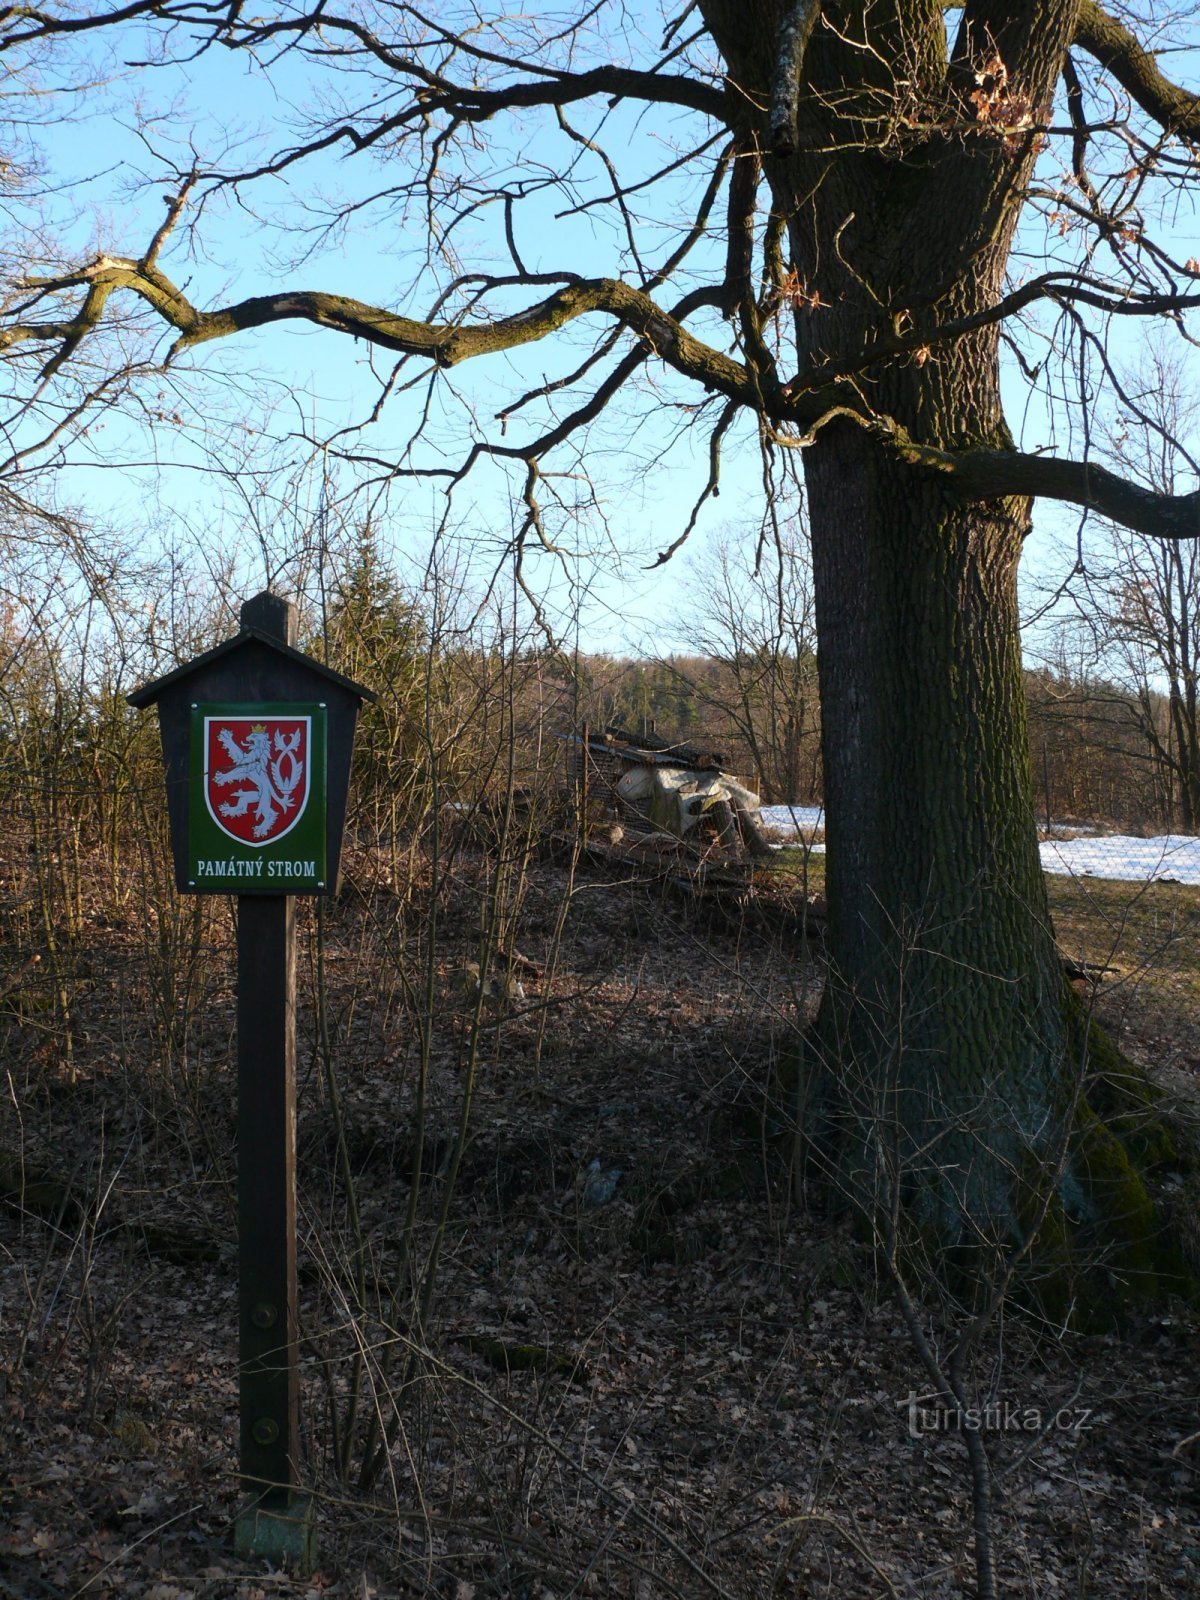 Designation of the Dobrkovice oak